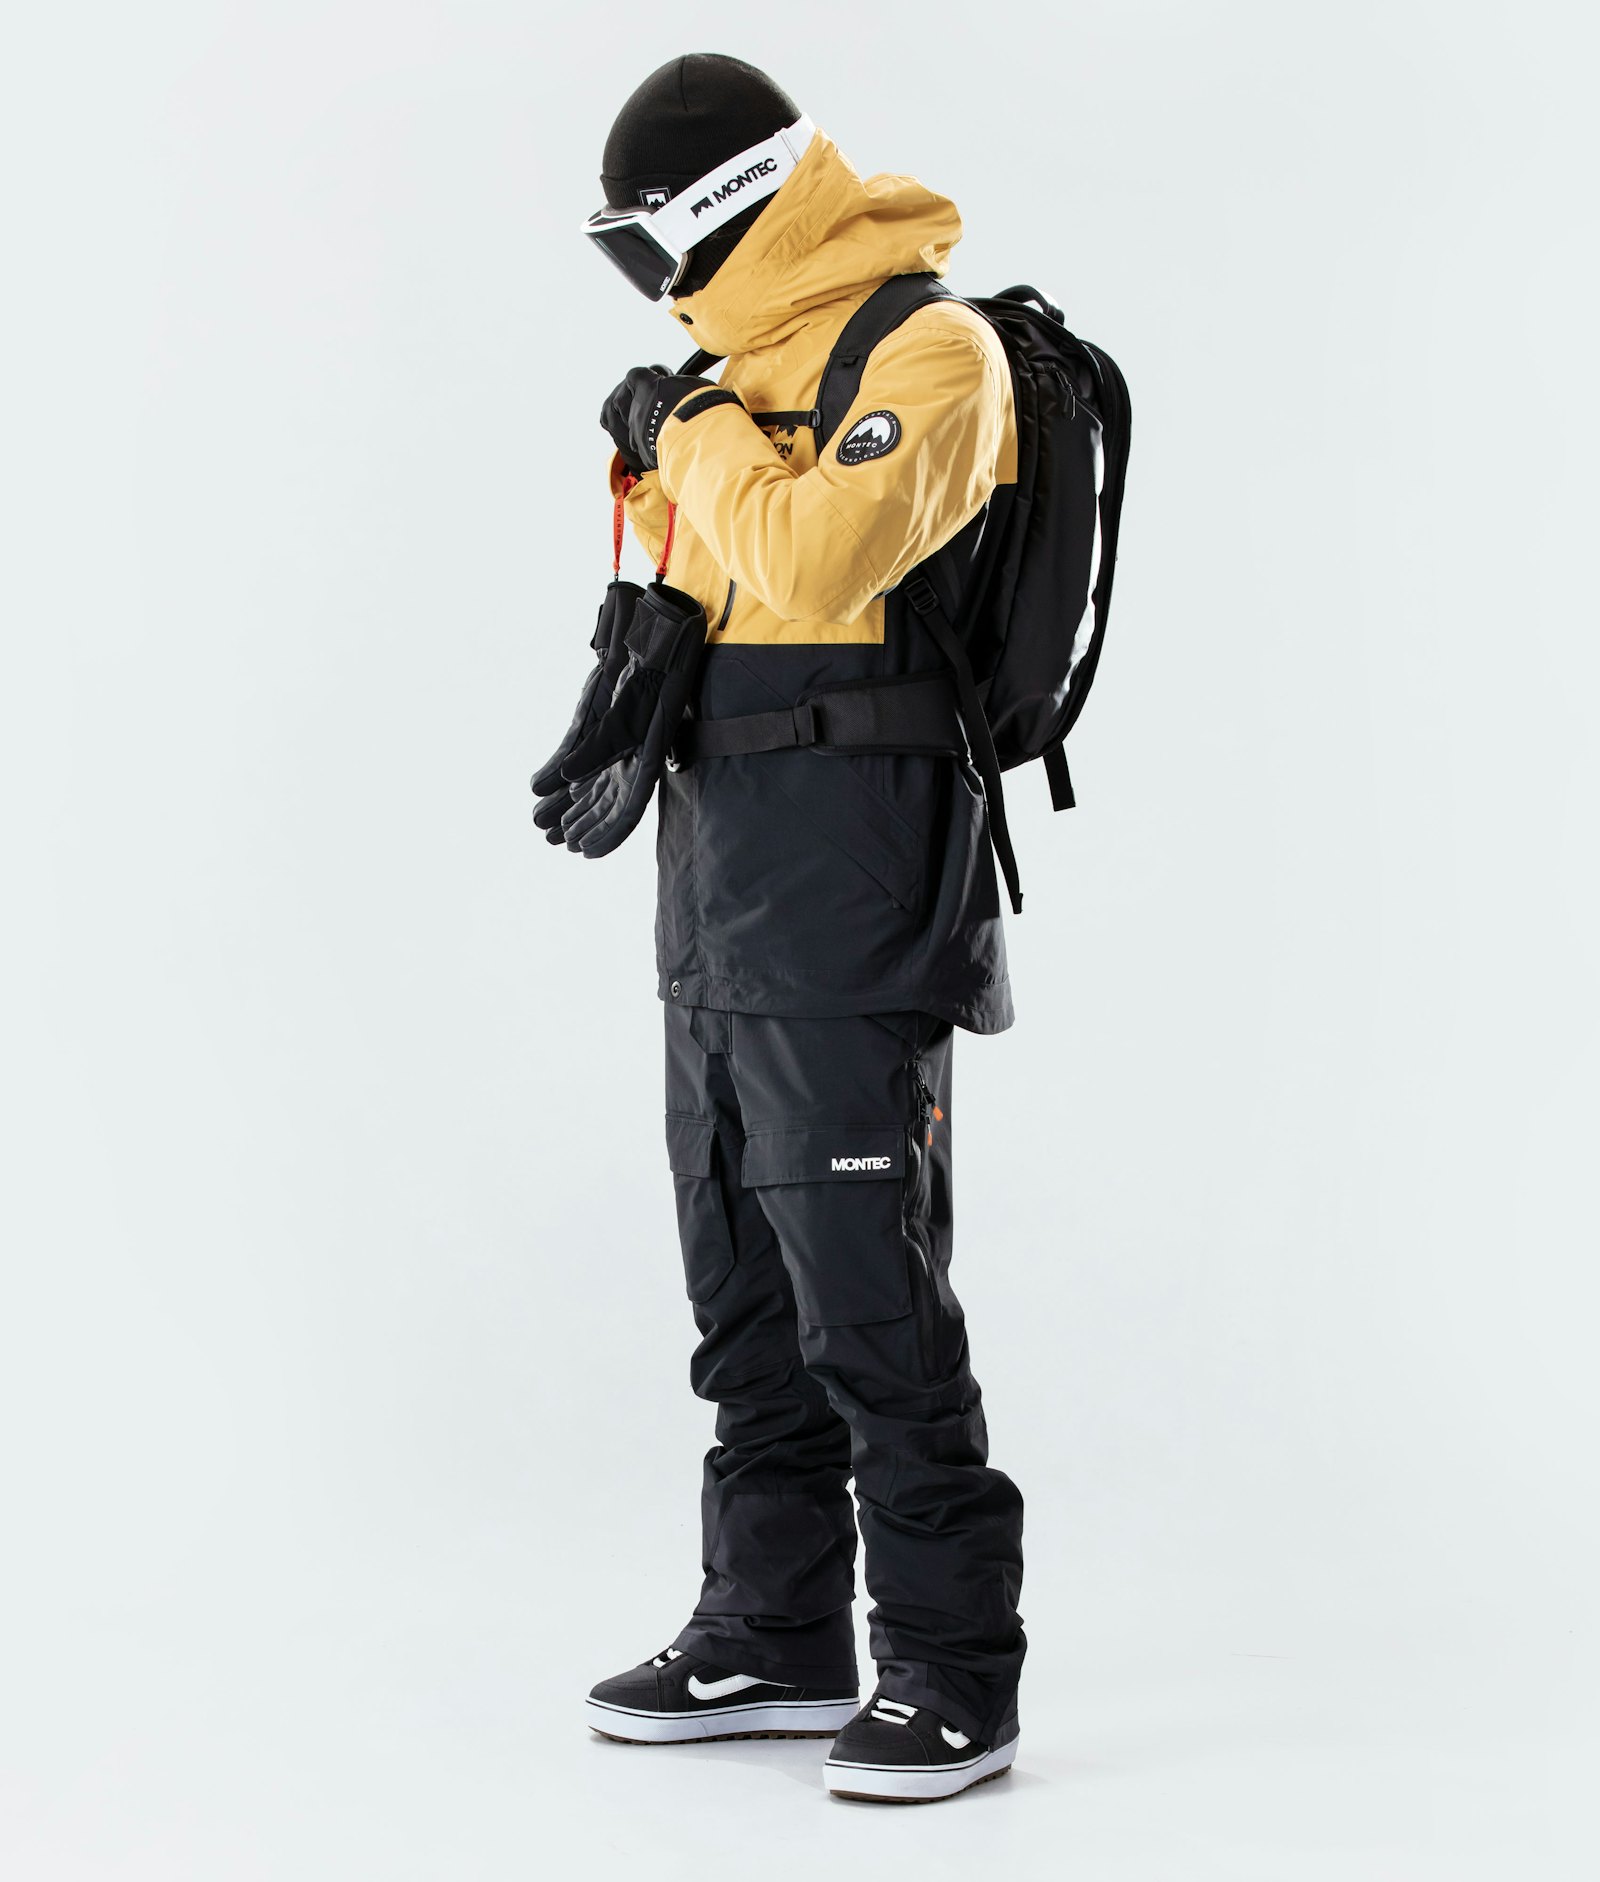 Montec Arch Chaqueta Snowboard Hombre Bright Yellow/Black